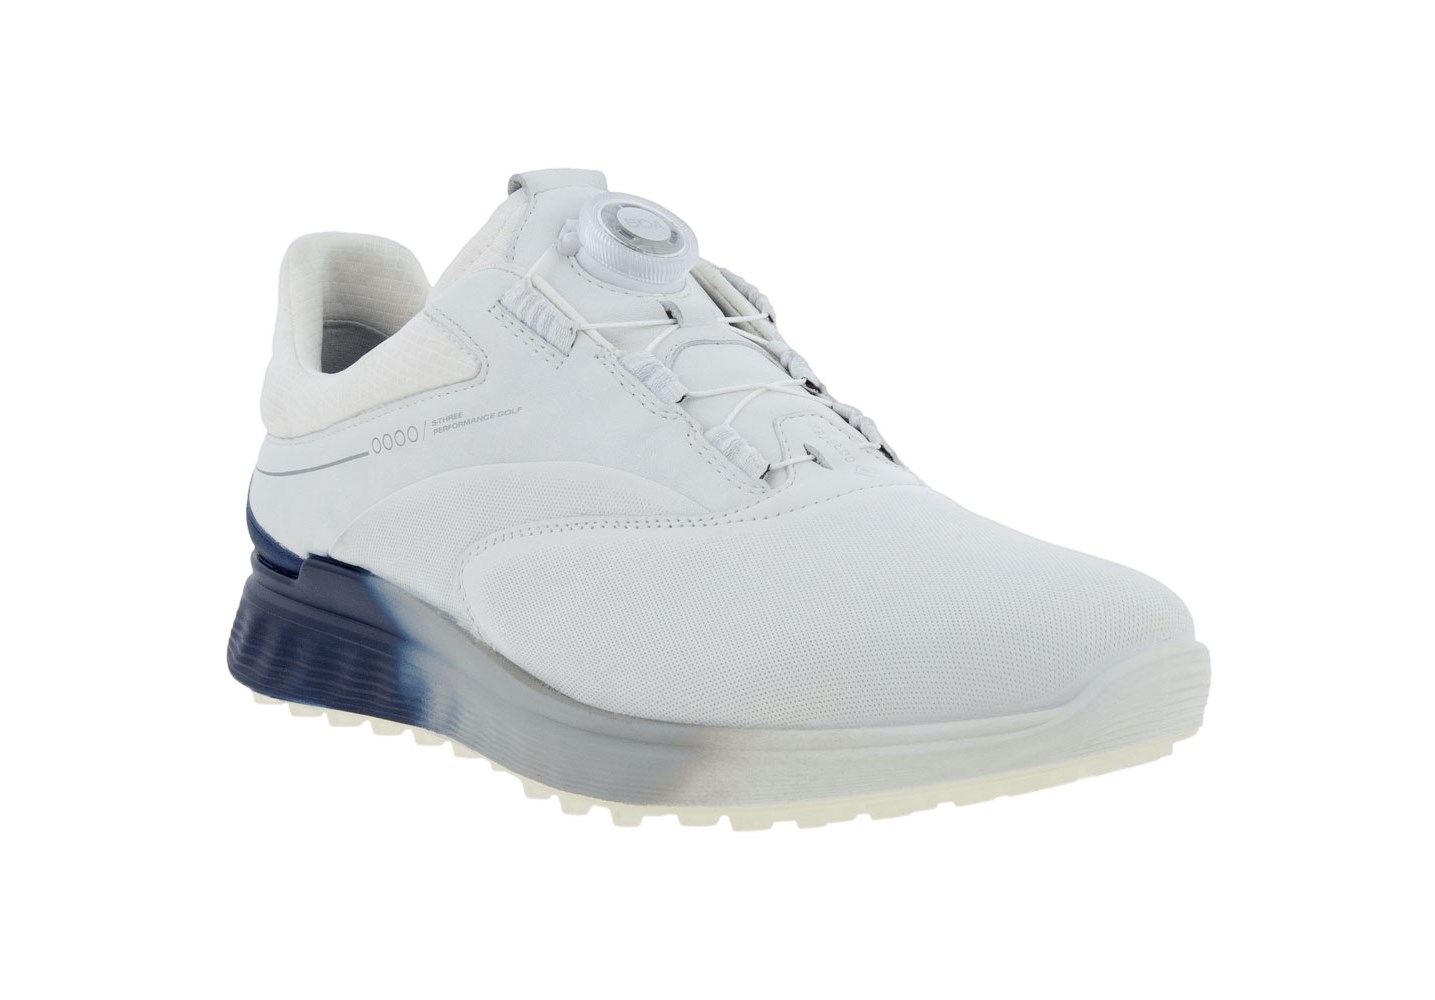 ECCO GOLF S-THREE BOA pánské golfové boty WHITE/BLUE DEPTHS/WHITE velikost 41, 43, 44, 45 - zvìtšit obrázek